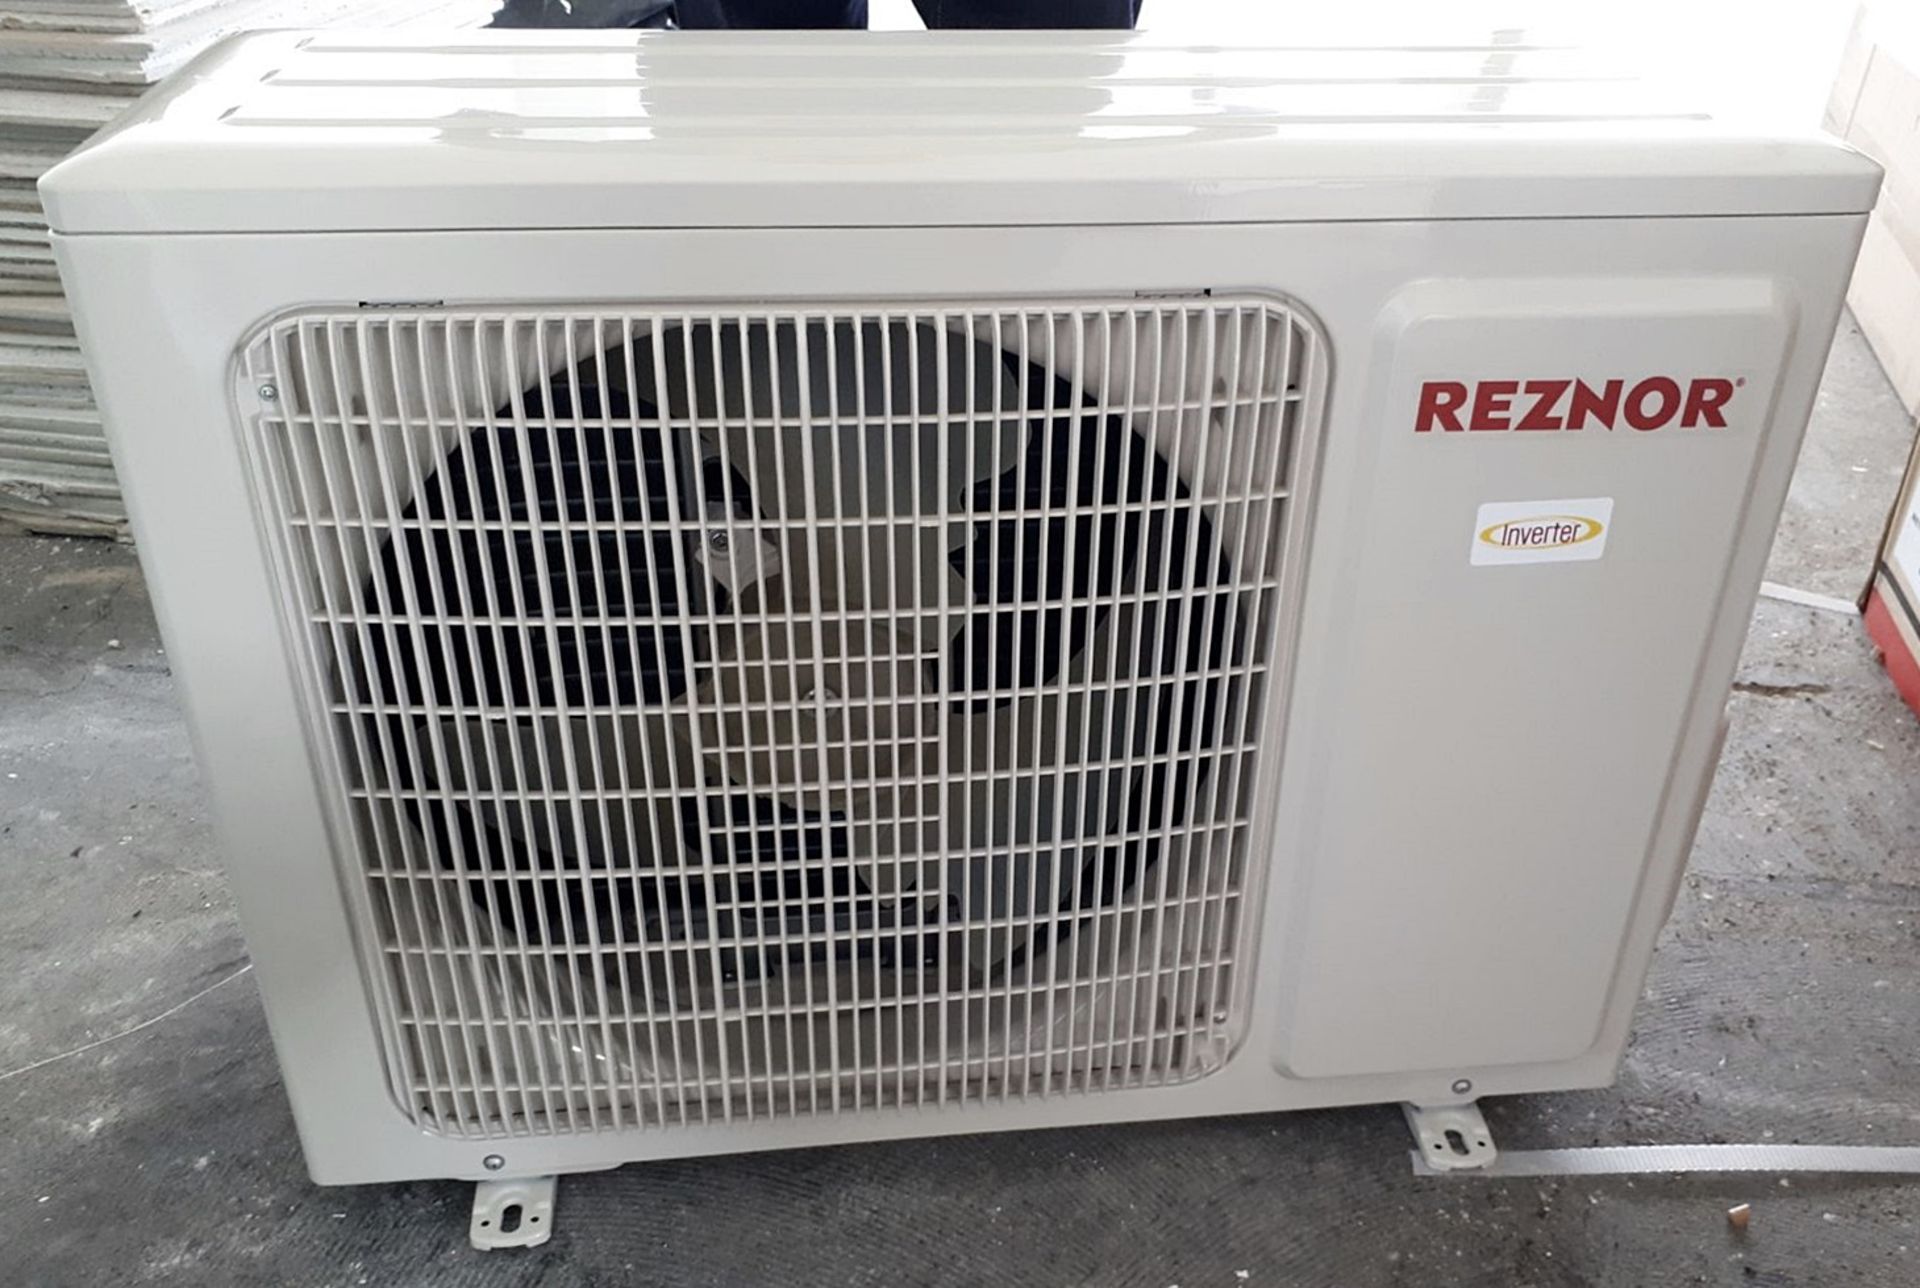 10 x Nortex 'Reznor' Air Conditioning 3.5kw Mini Split Systems - Model RHH12 - Brand New Boxed Stock